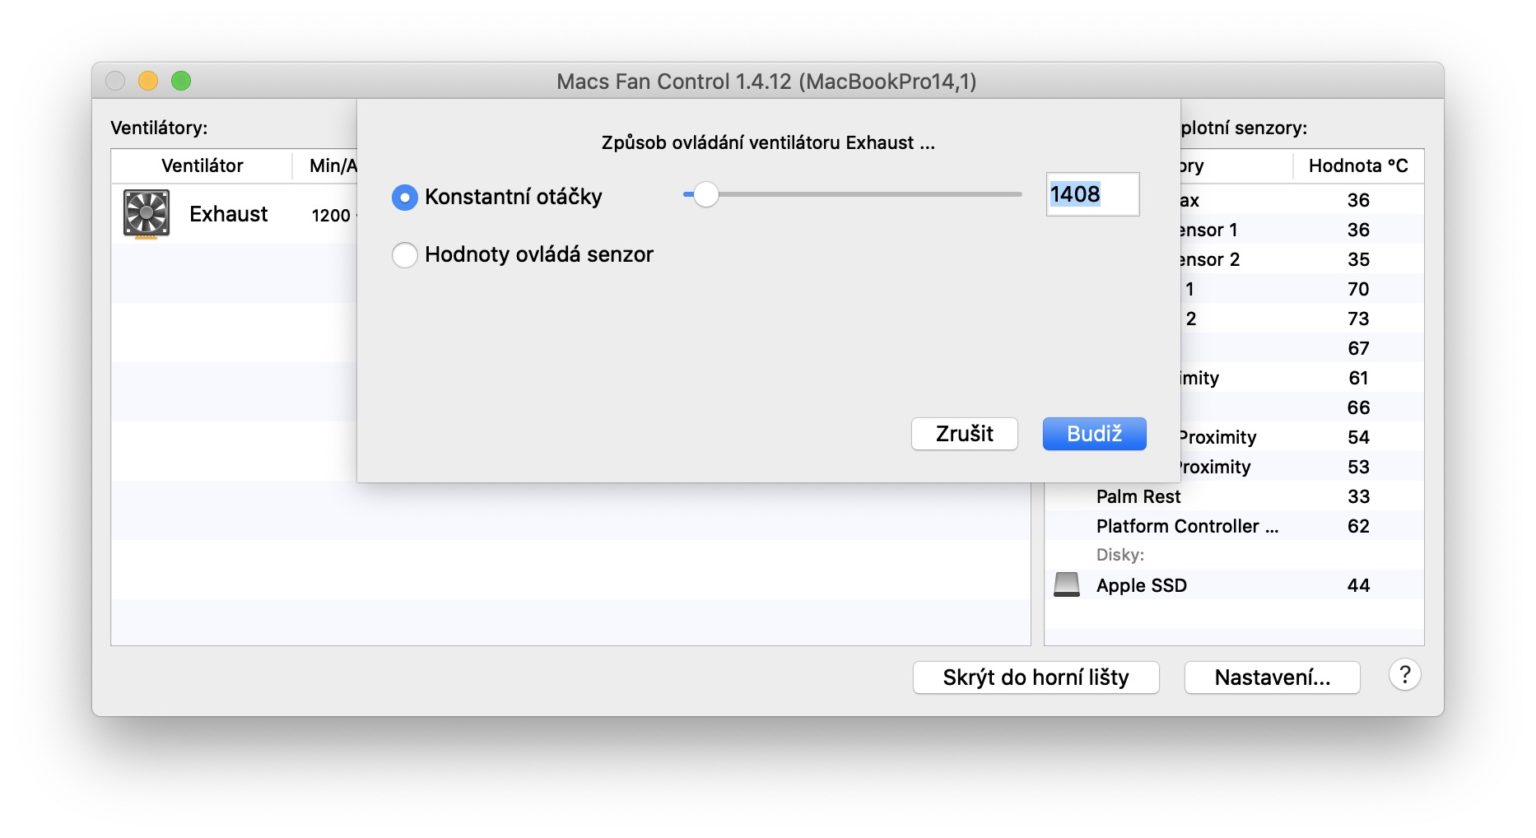 download the last version for mac Macs Fan Control Pro